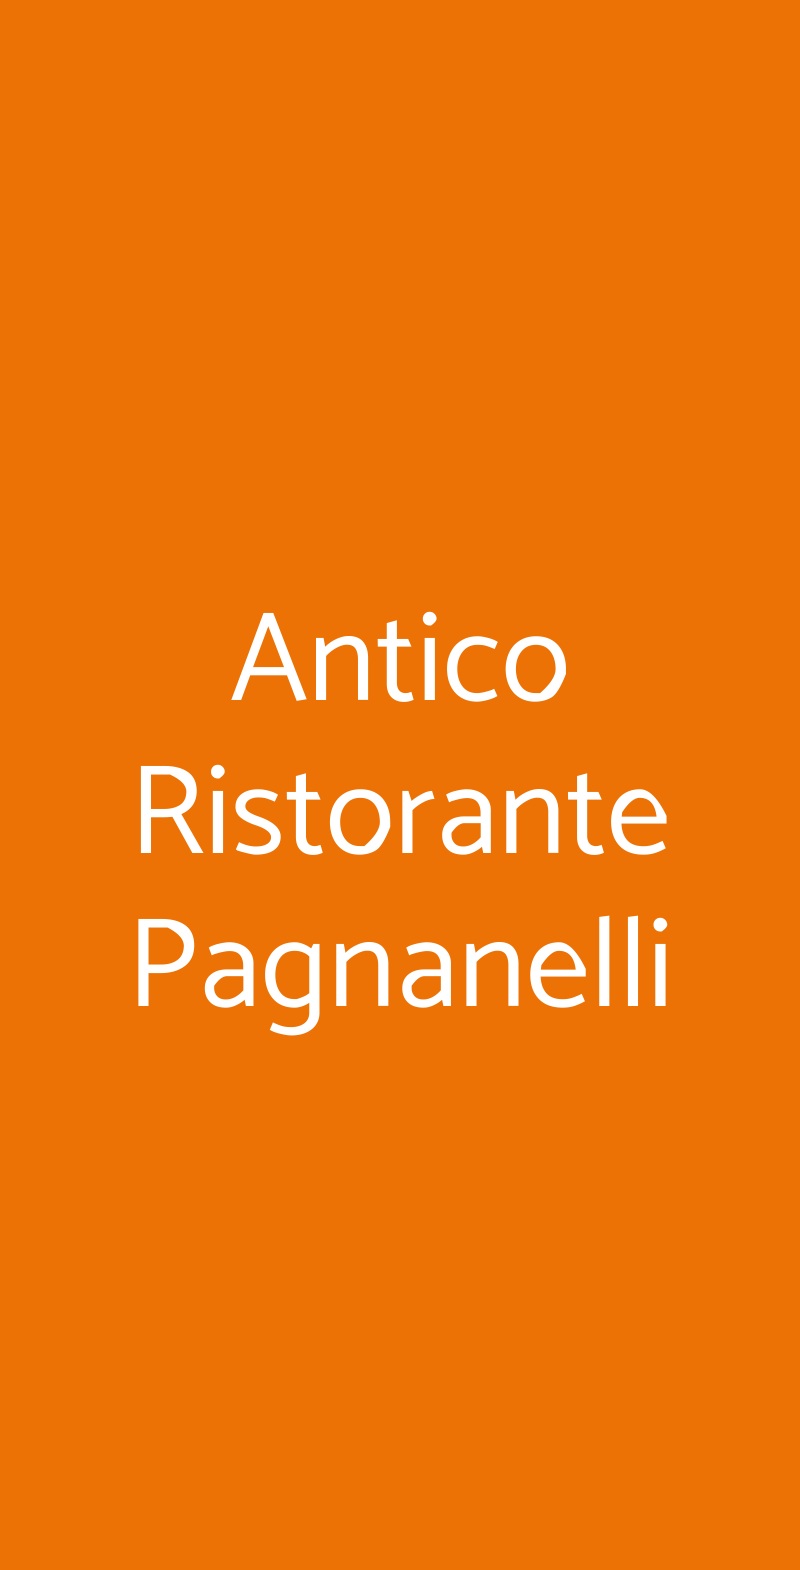 Antico Ristorante Pagnanelli Castel Gandolfo menù 1 pagina